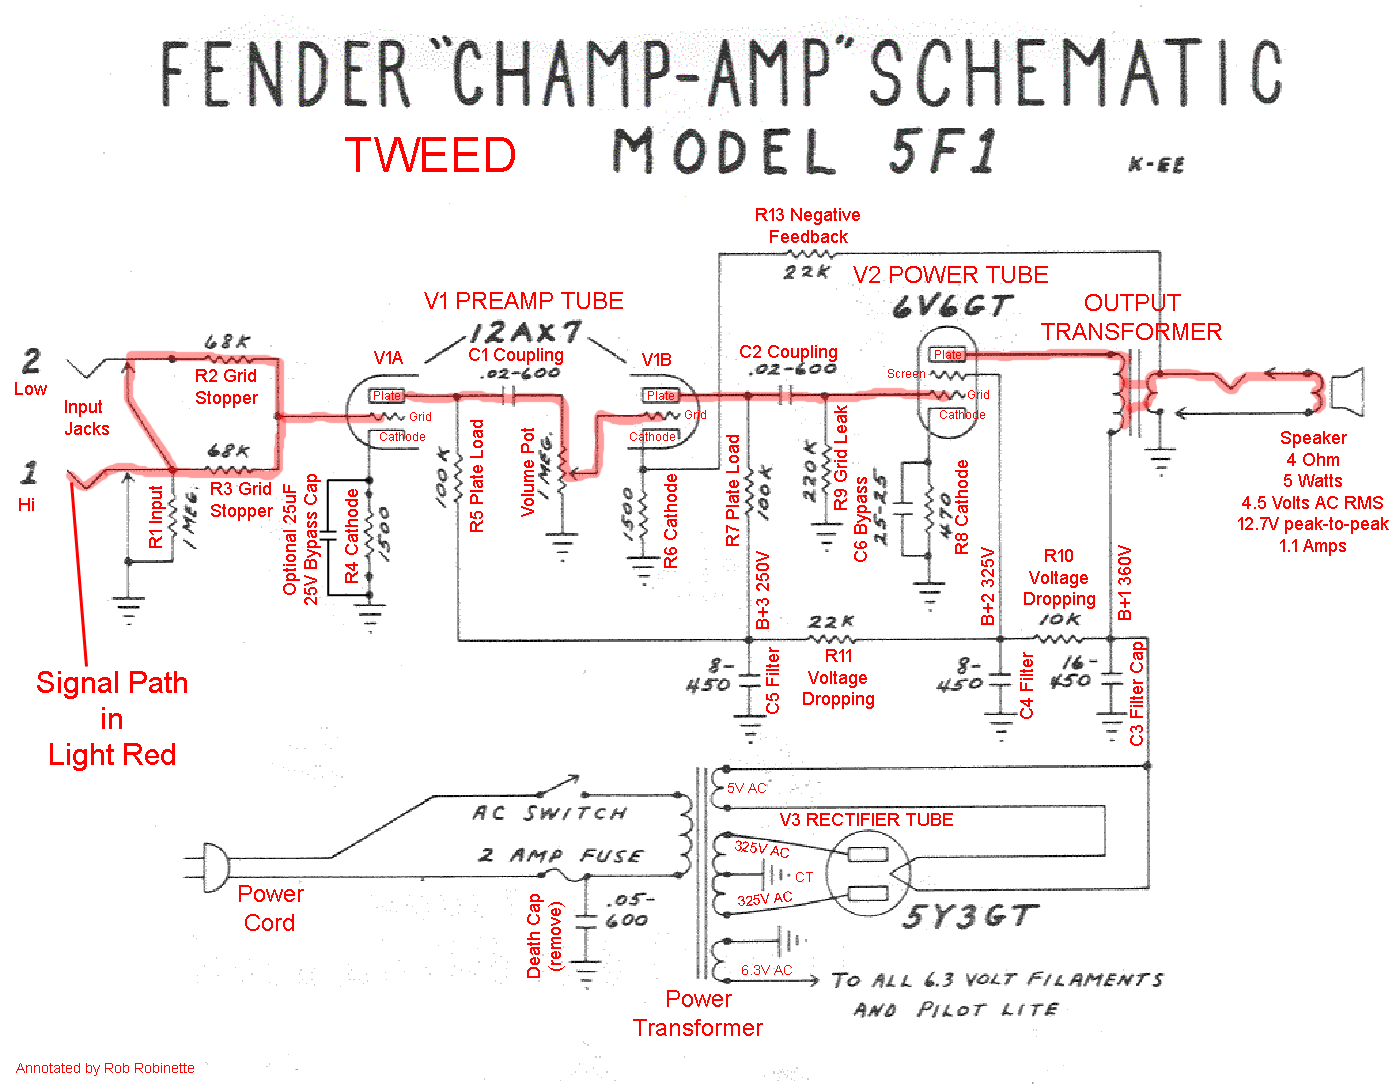 Fender champ amp aa764 schematic definition